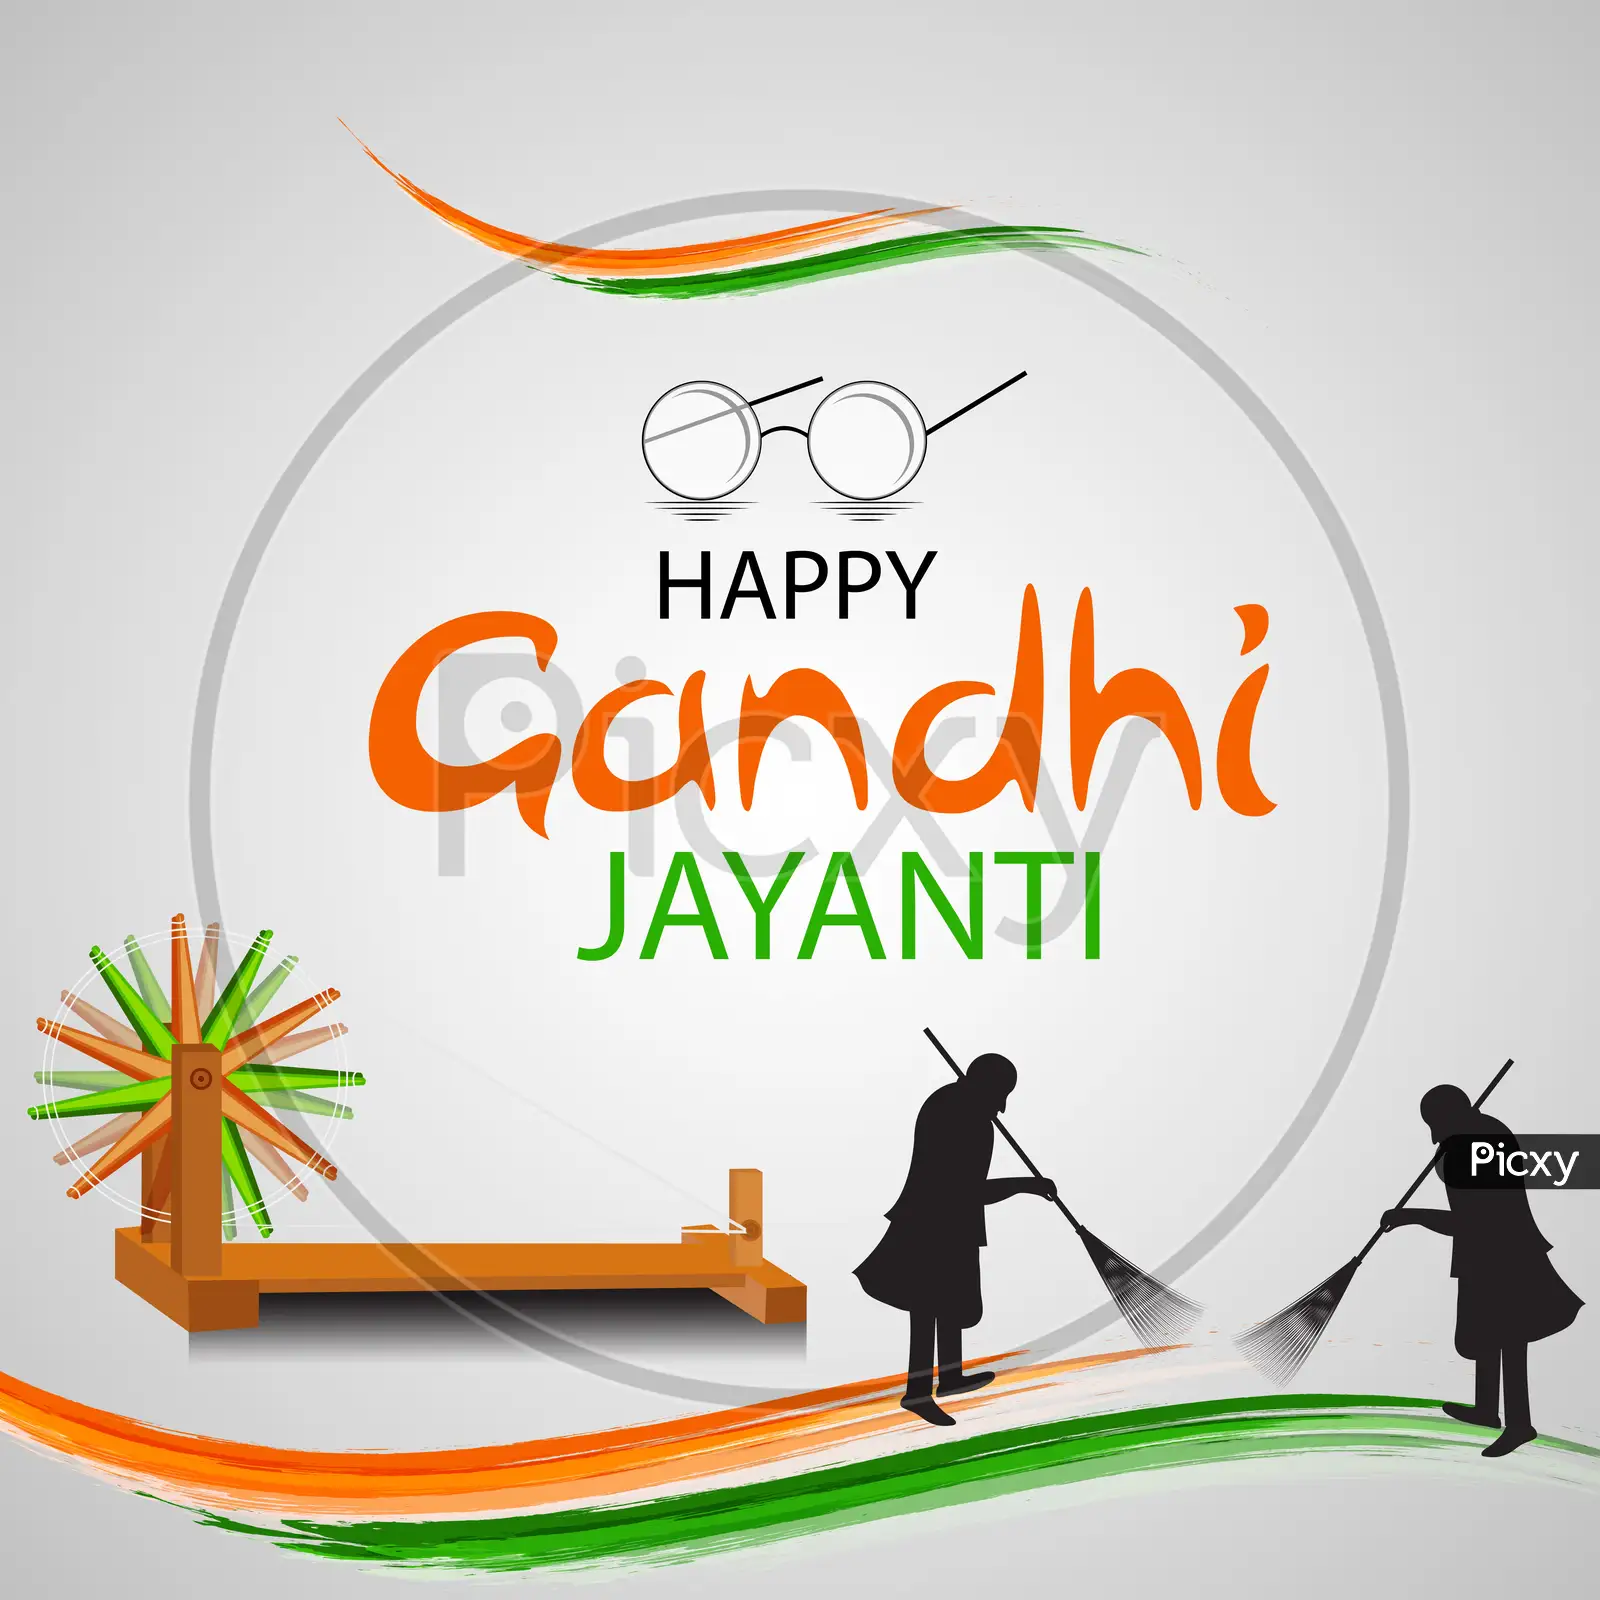 343 Gandhi Jayanti Logo Images, Stock Photos & Vectors | Shutterstock